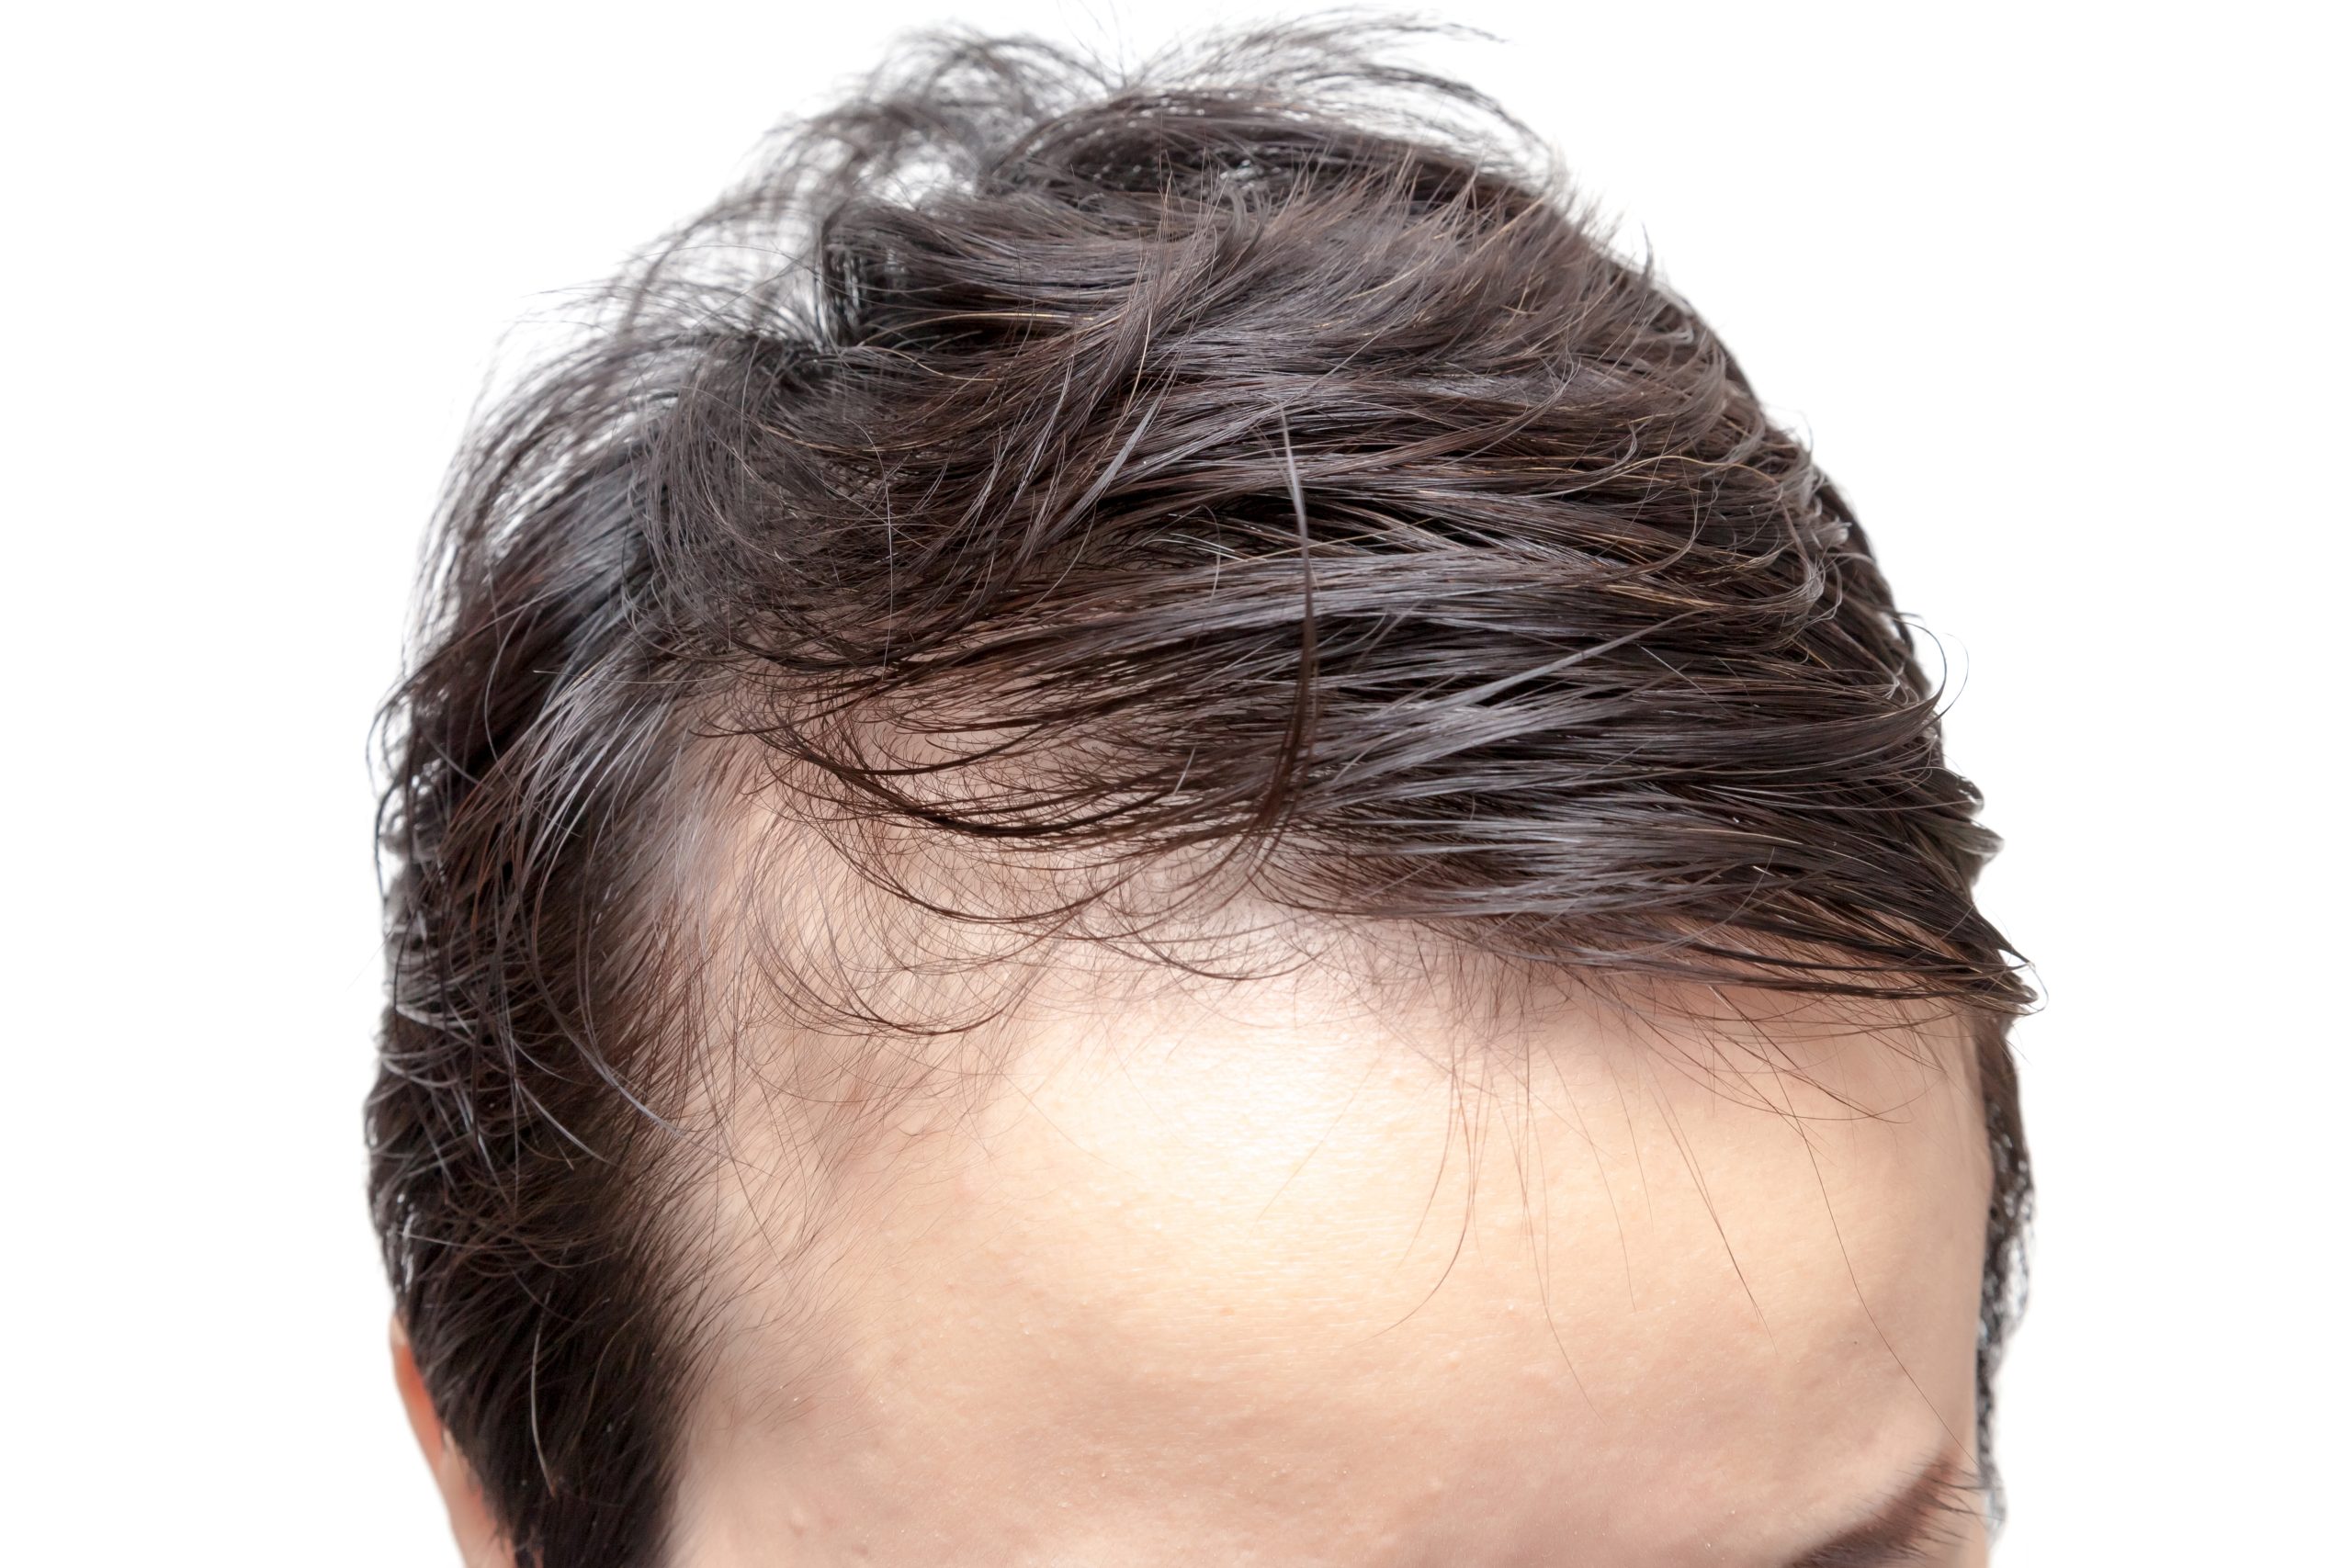 A man's head before hair transplant